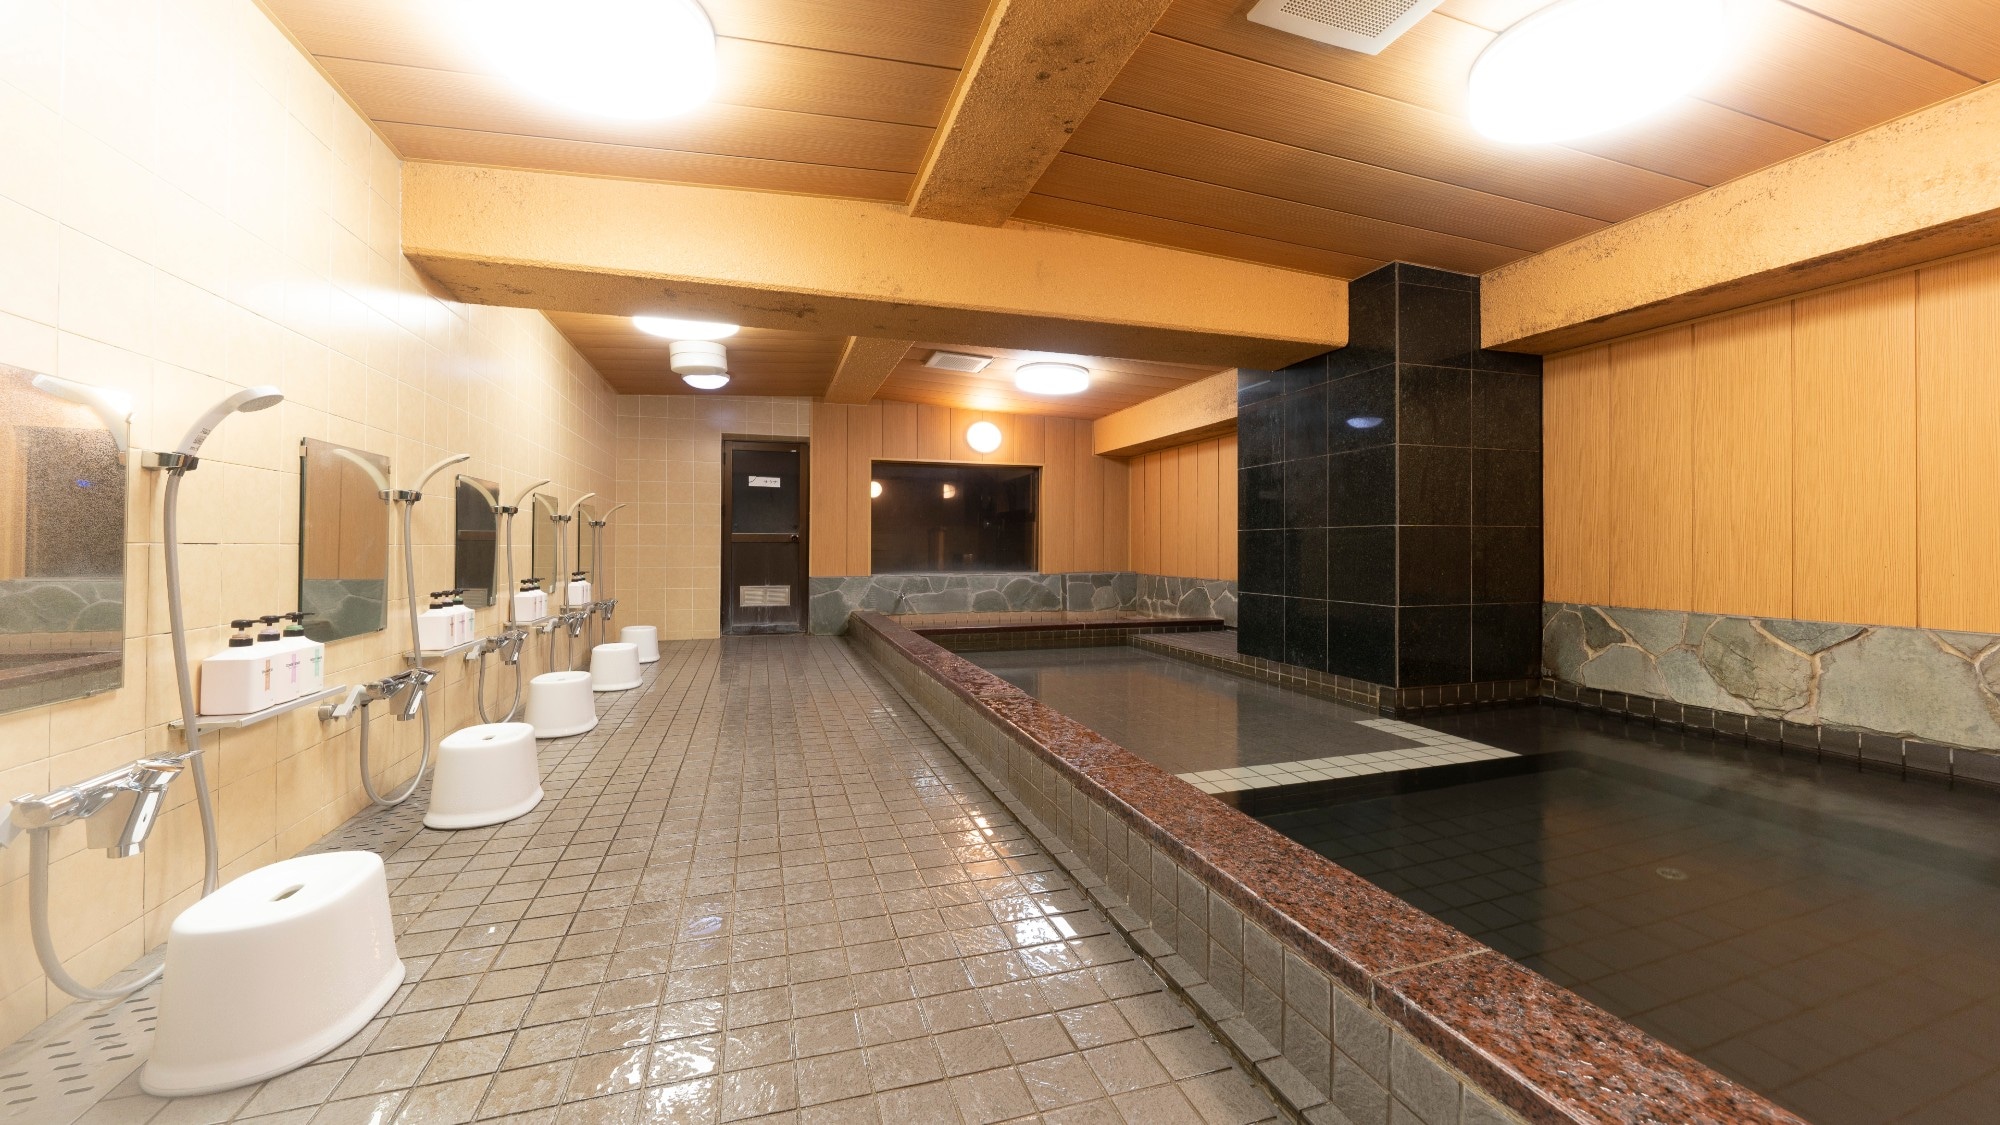 Facilities ｜ Large communal bath